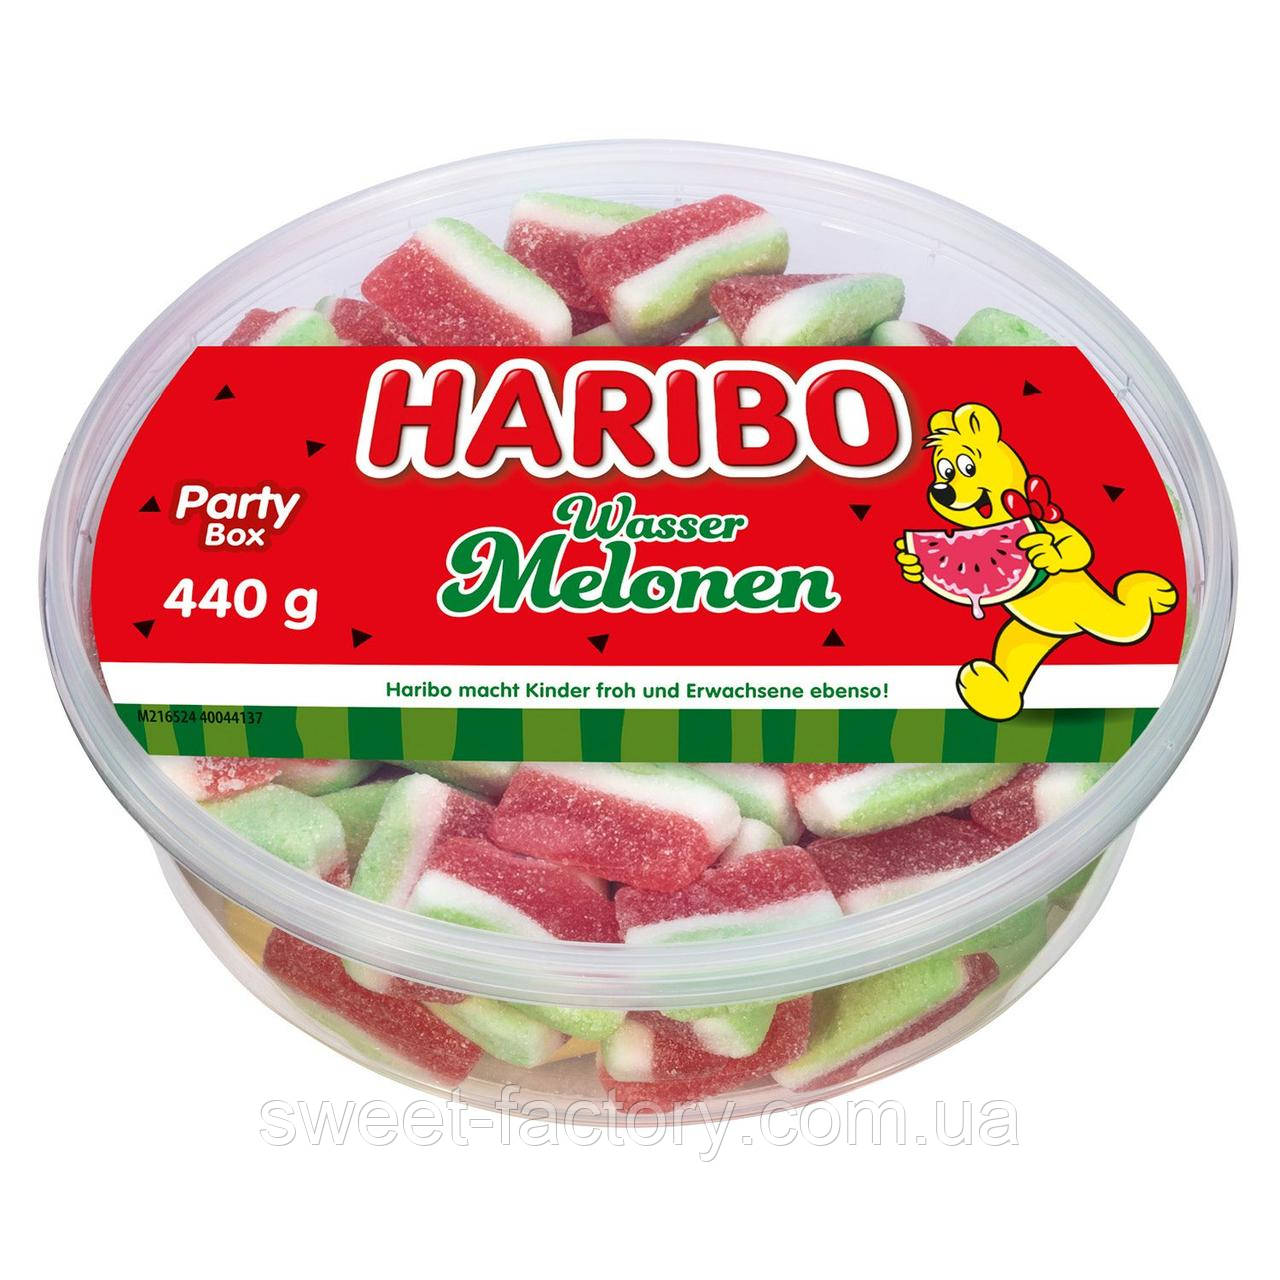 Haribo Wasser Melone Арбуз 440 g